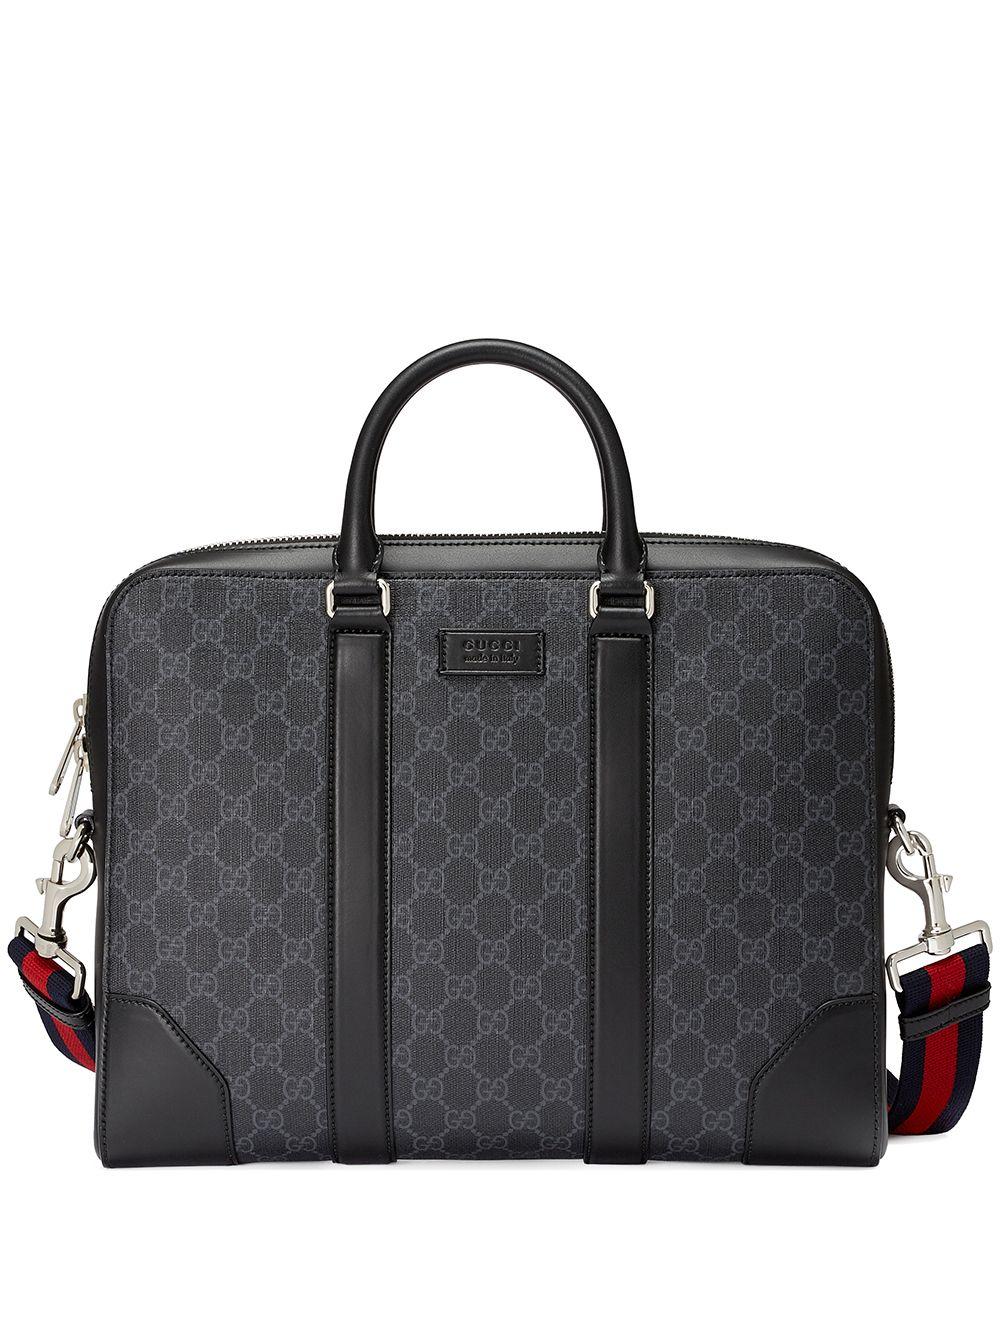 Gucci Canvas GG Black Briefcase for Men - Save 32% | Lyst